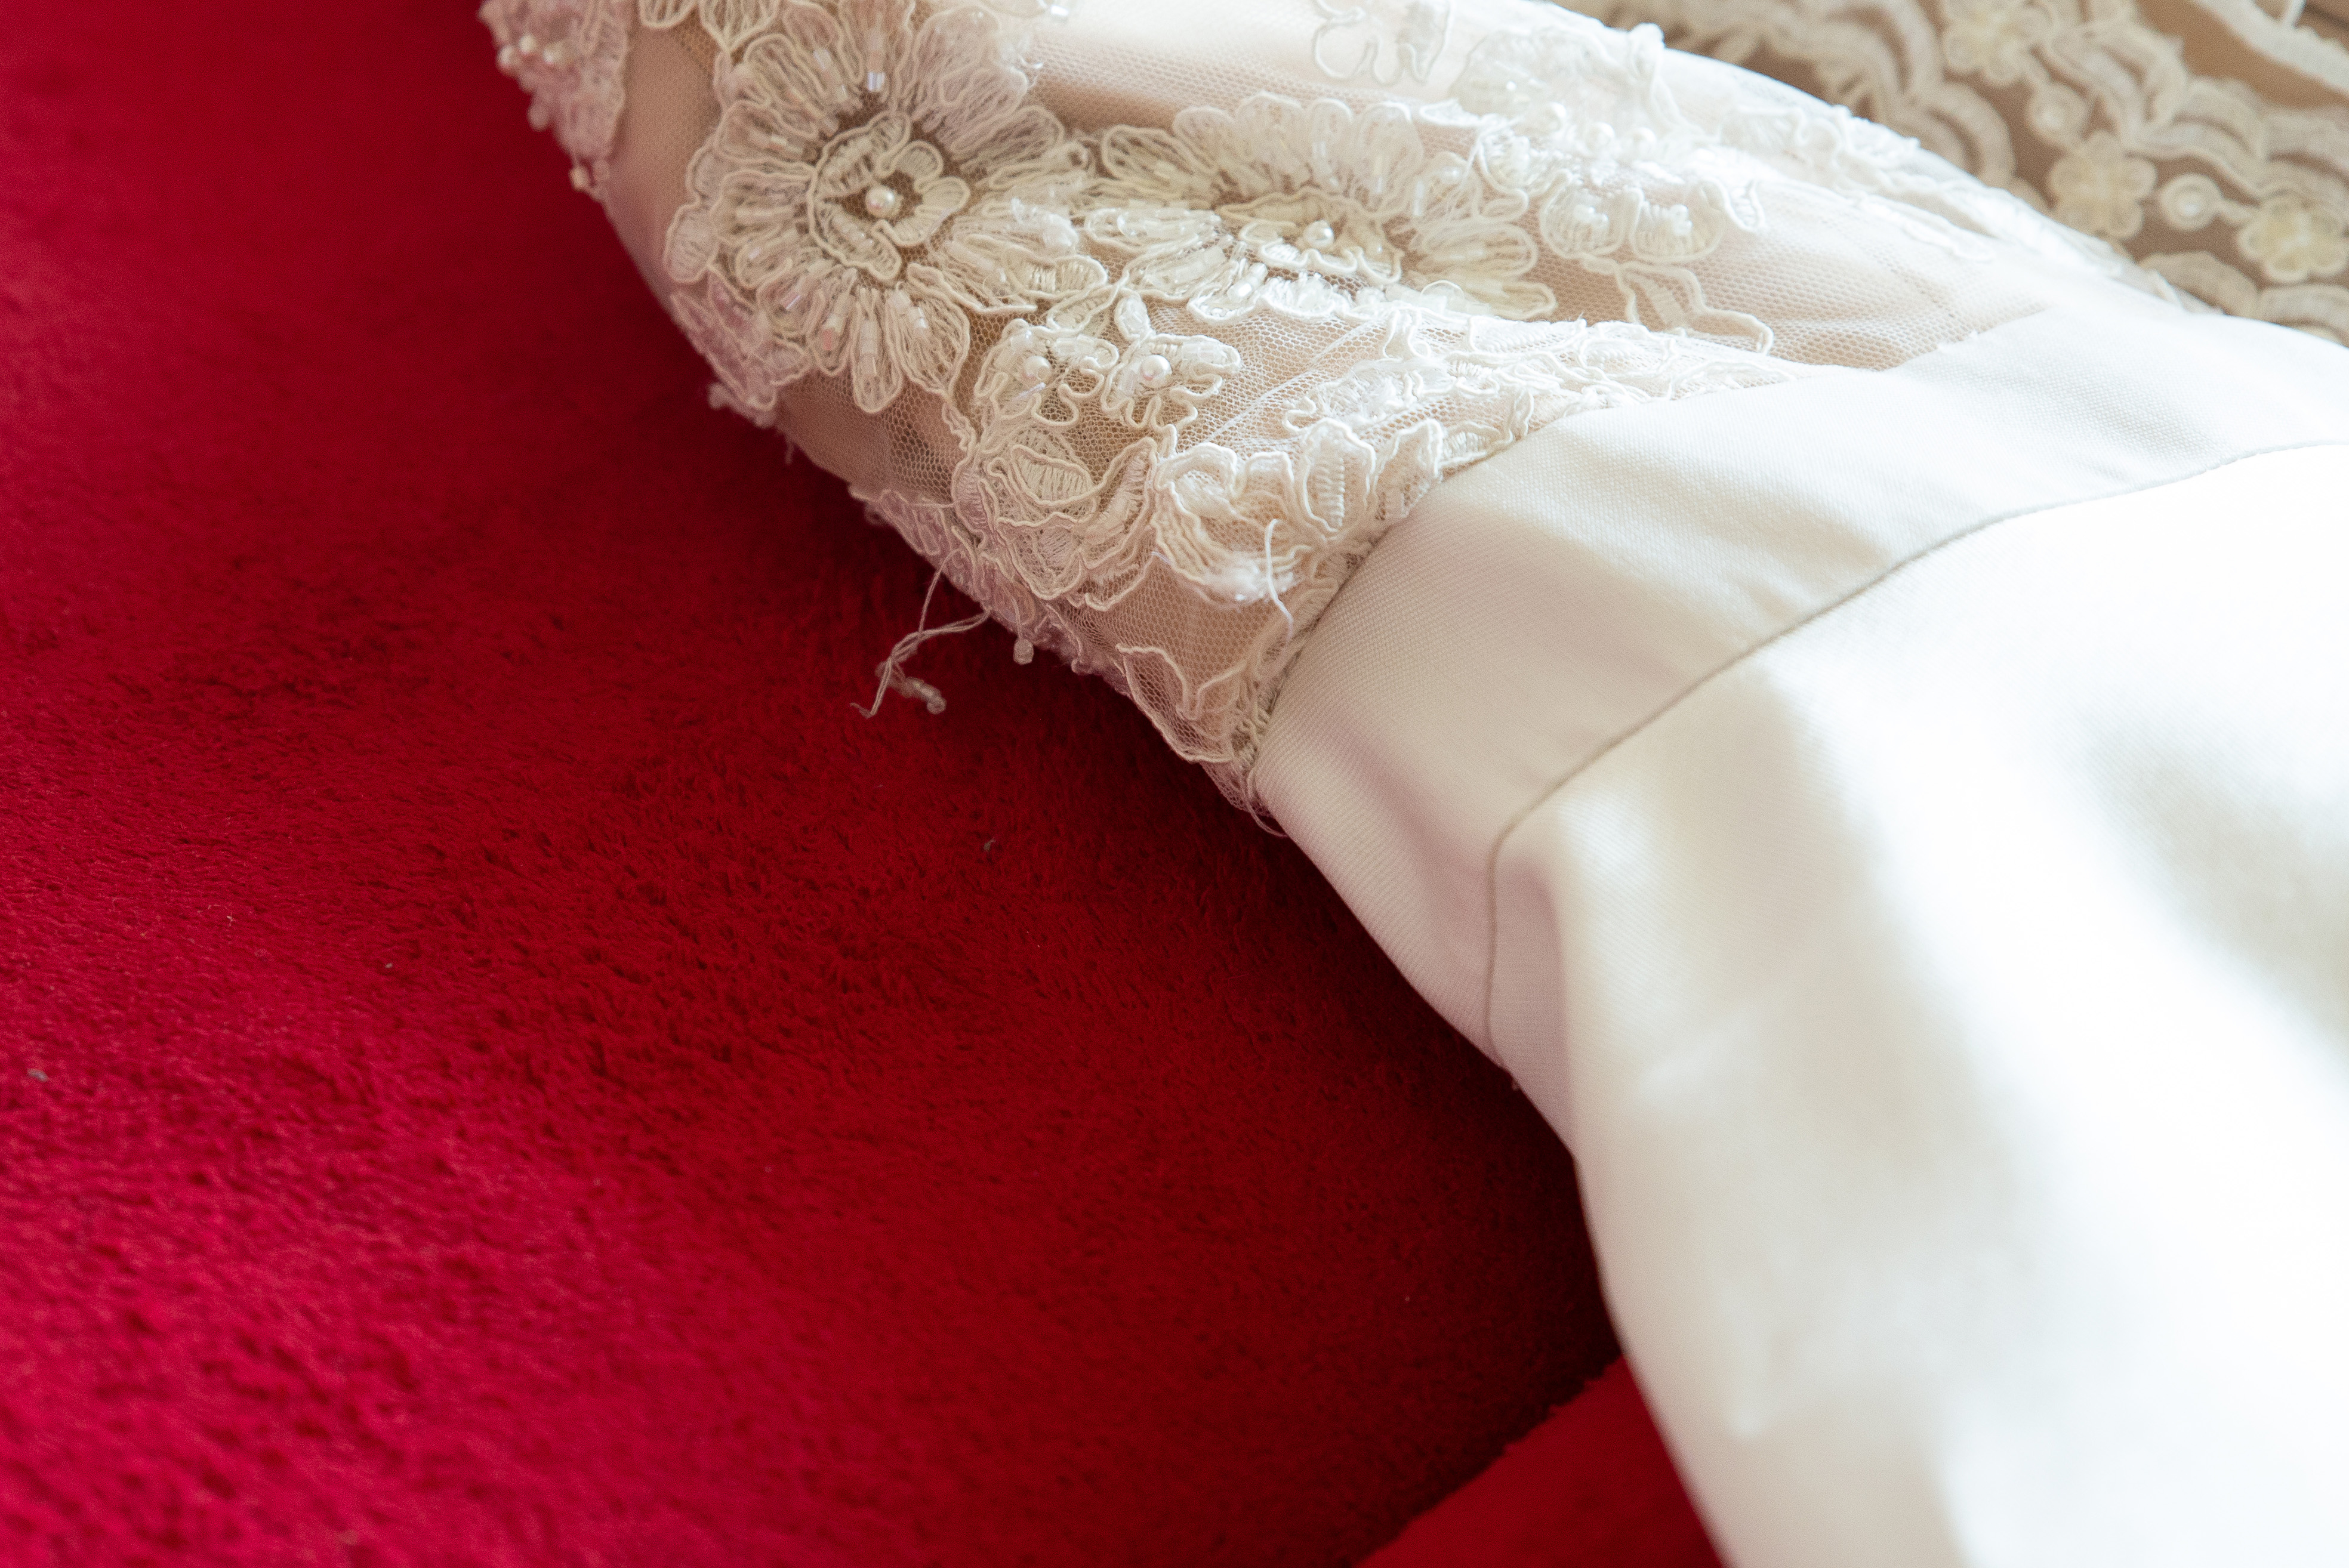 Primer plano de un vestido blanco roto | Fuente: Shutterstock